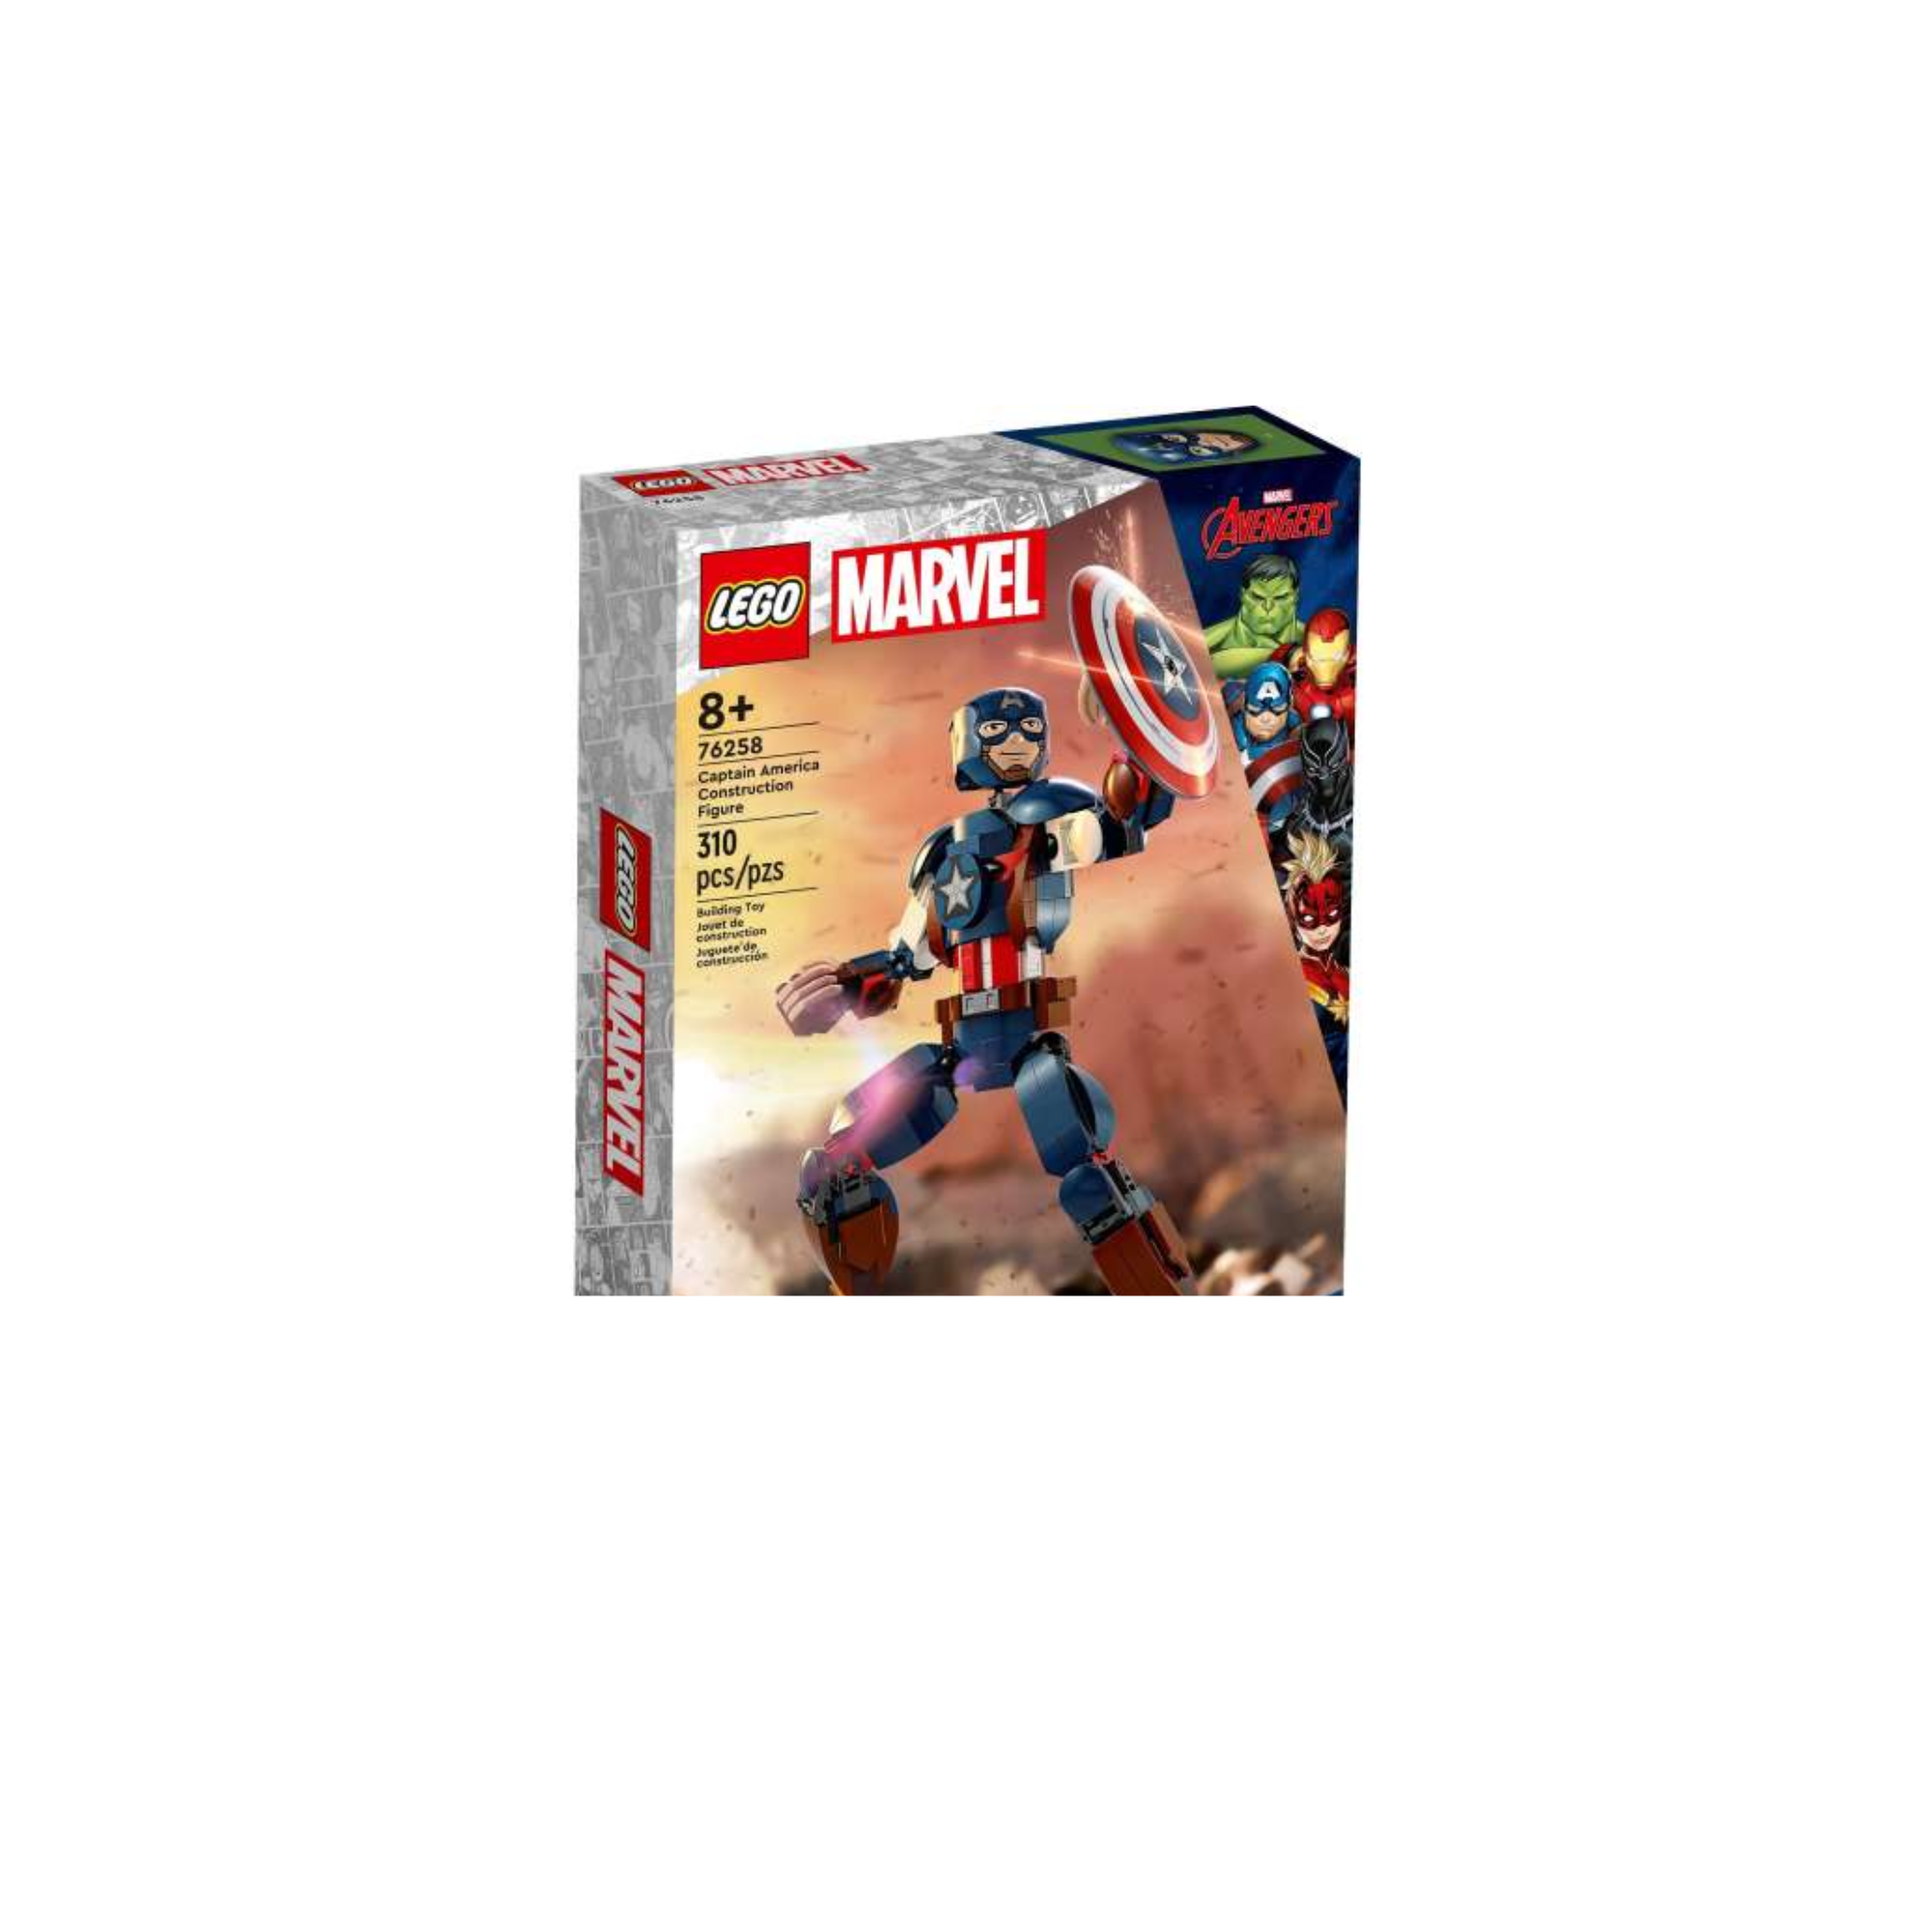 Marvel Lego Captain America building figure